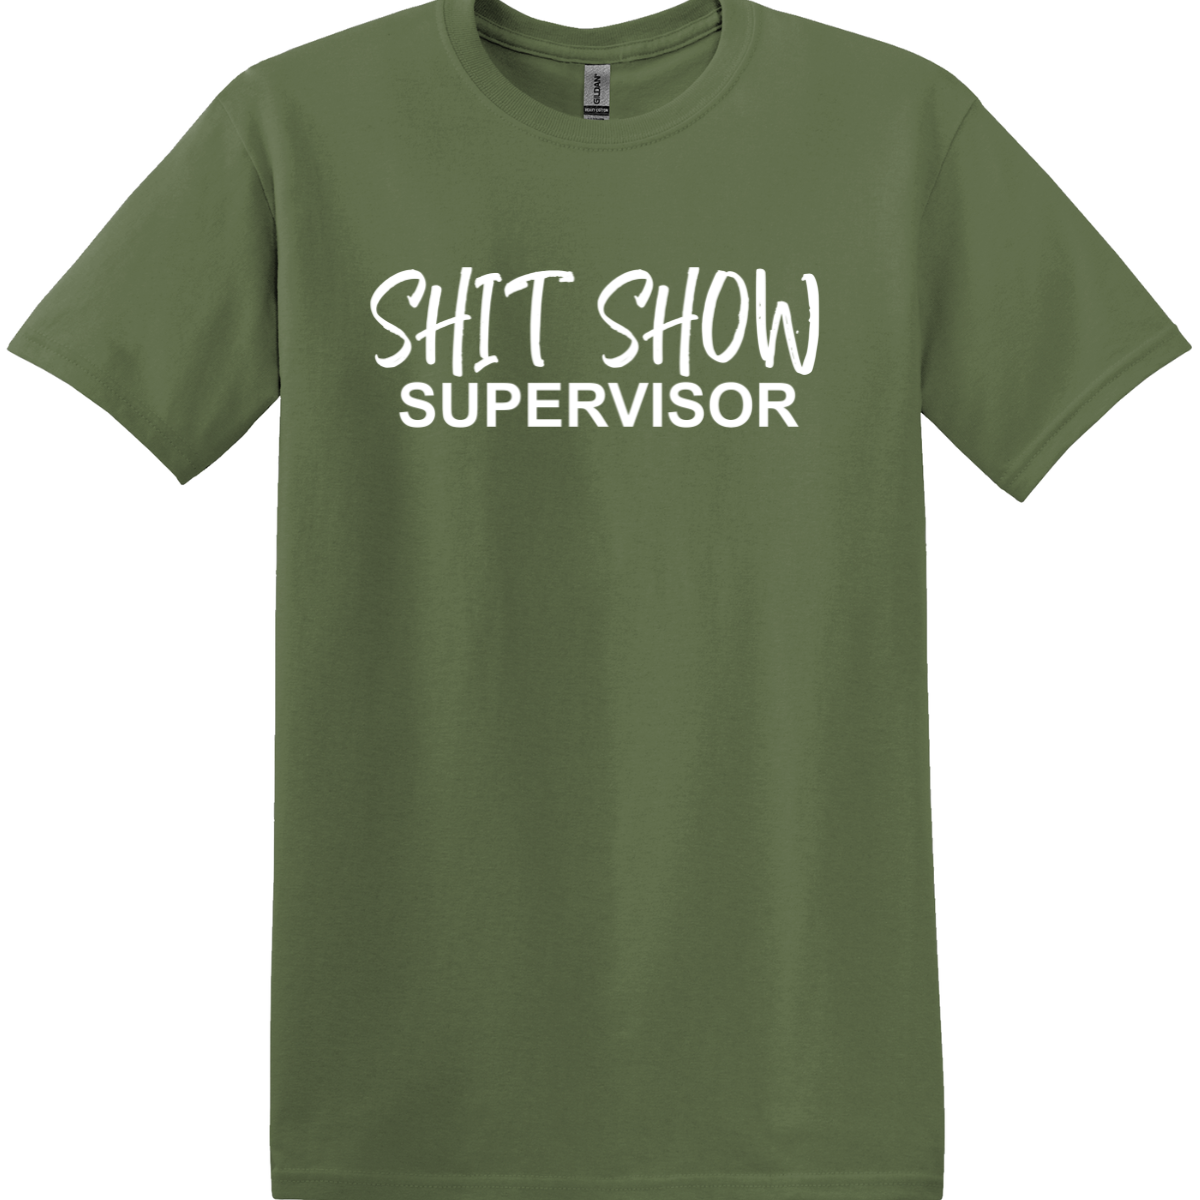 Shit Show Supervisor Tee